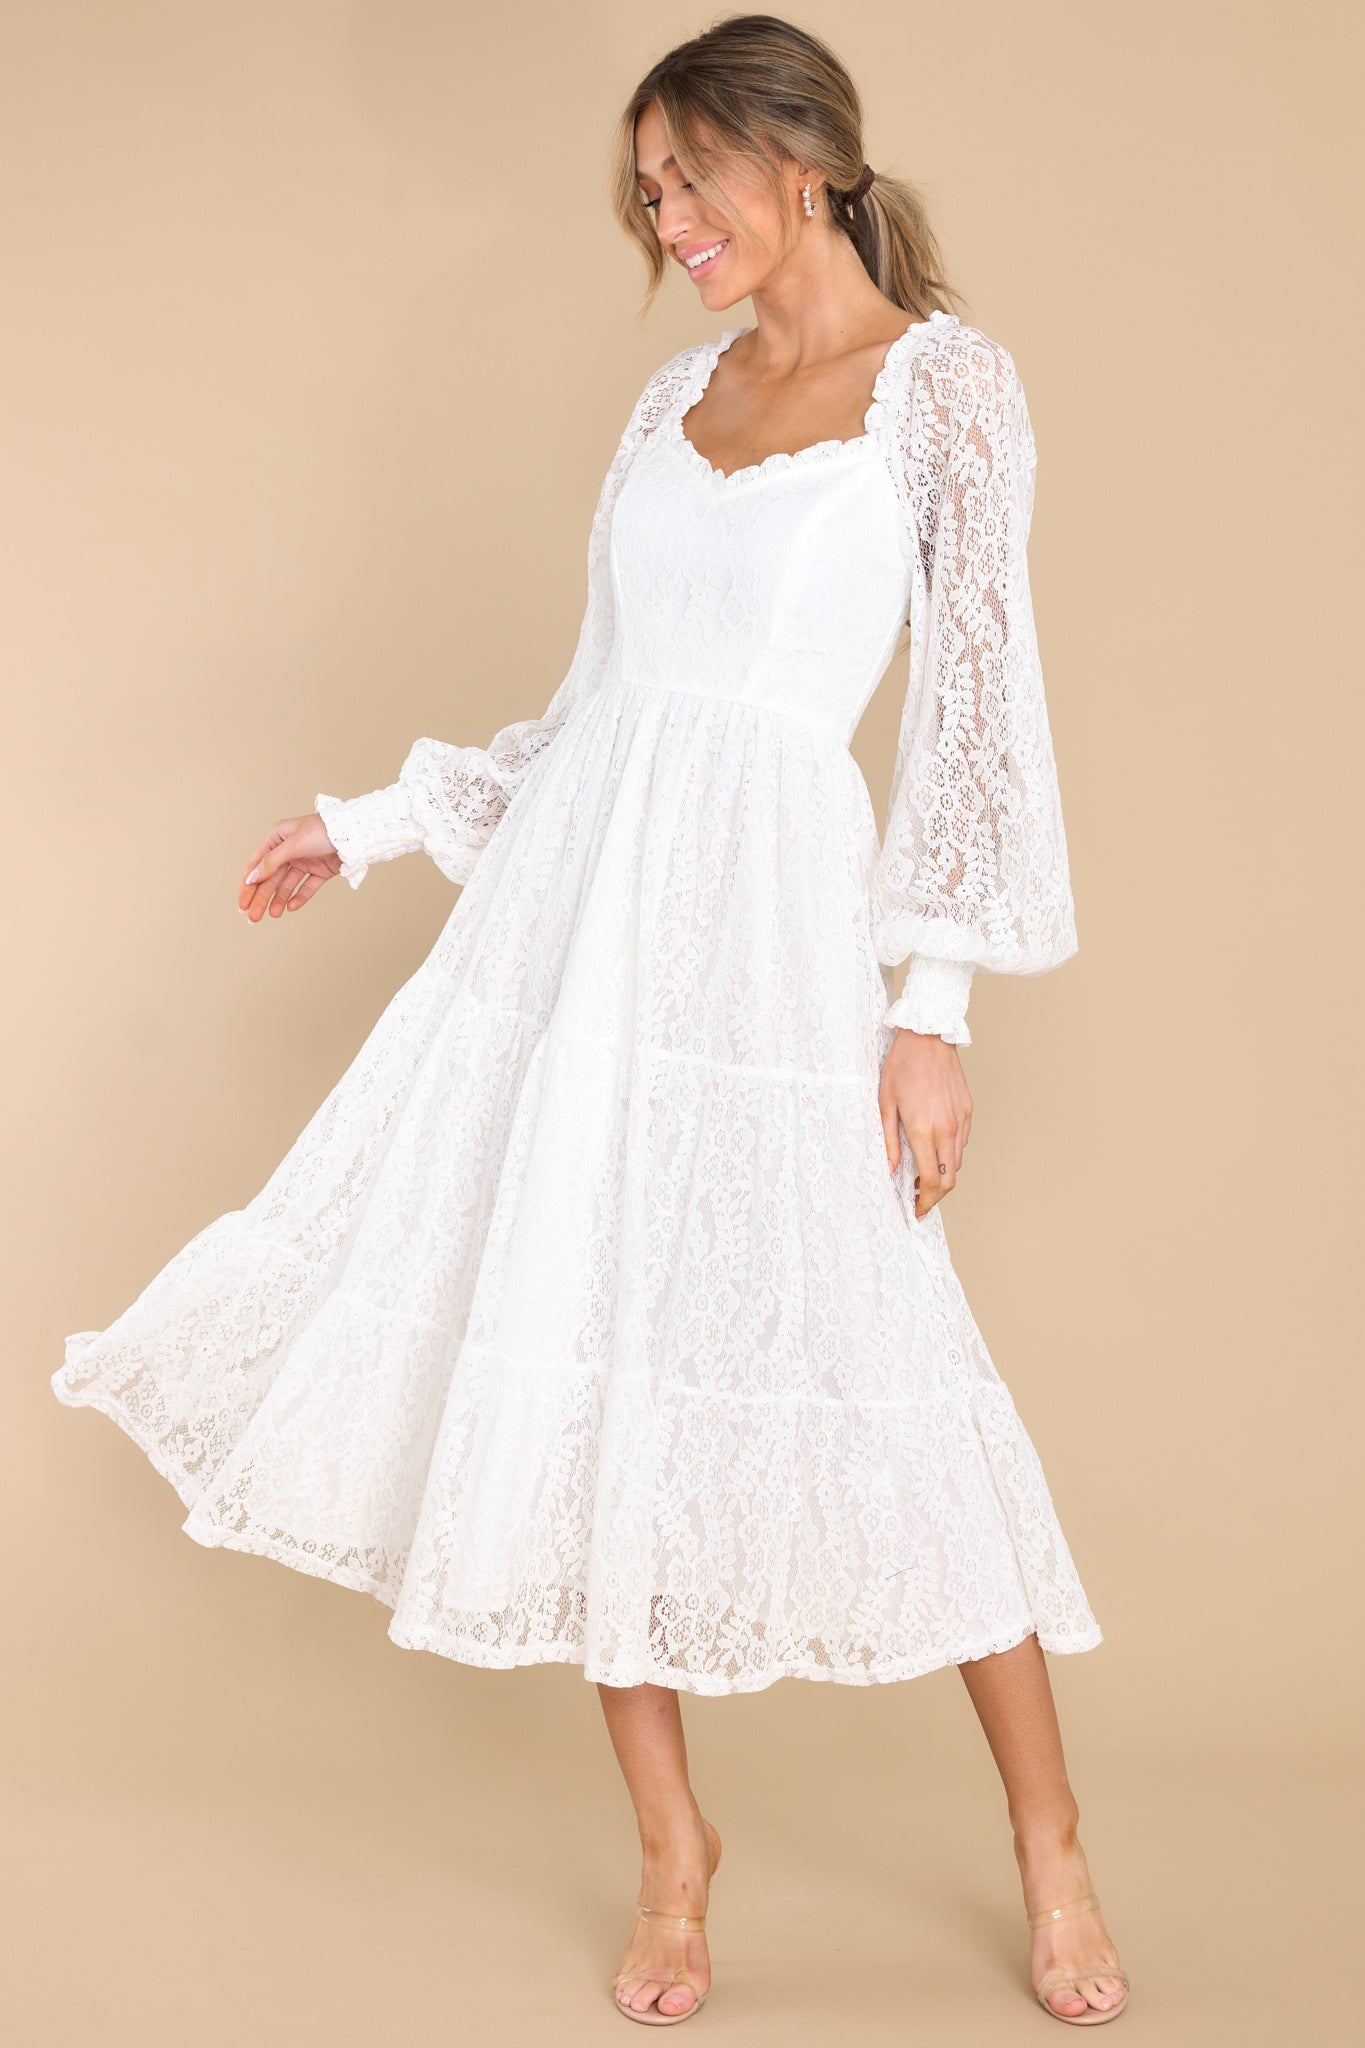 Stunning White Lace Dress - Midi Dresses